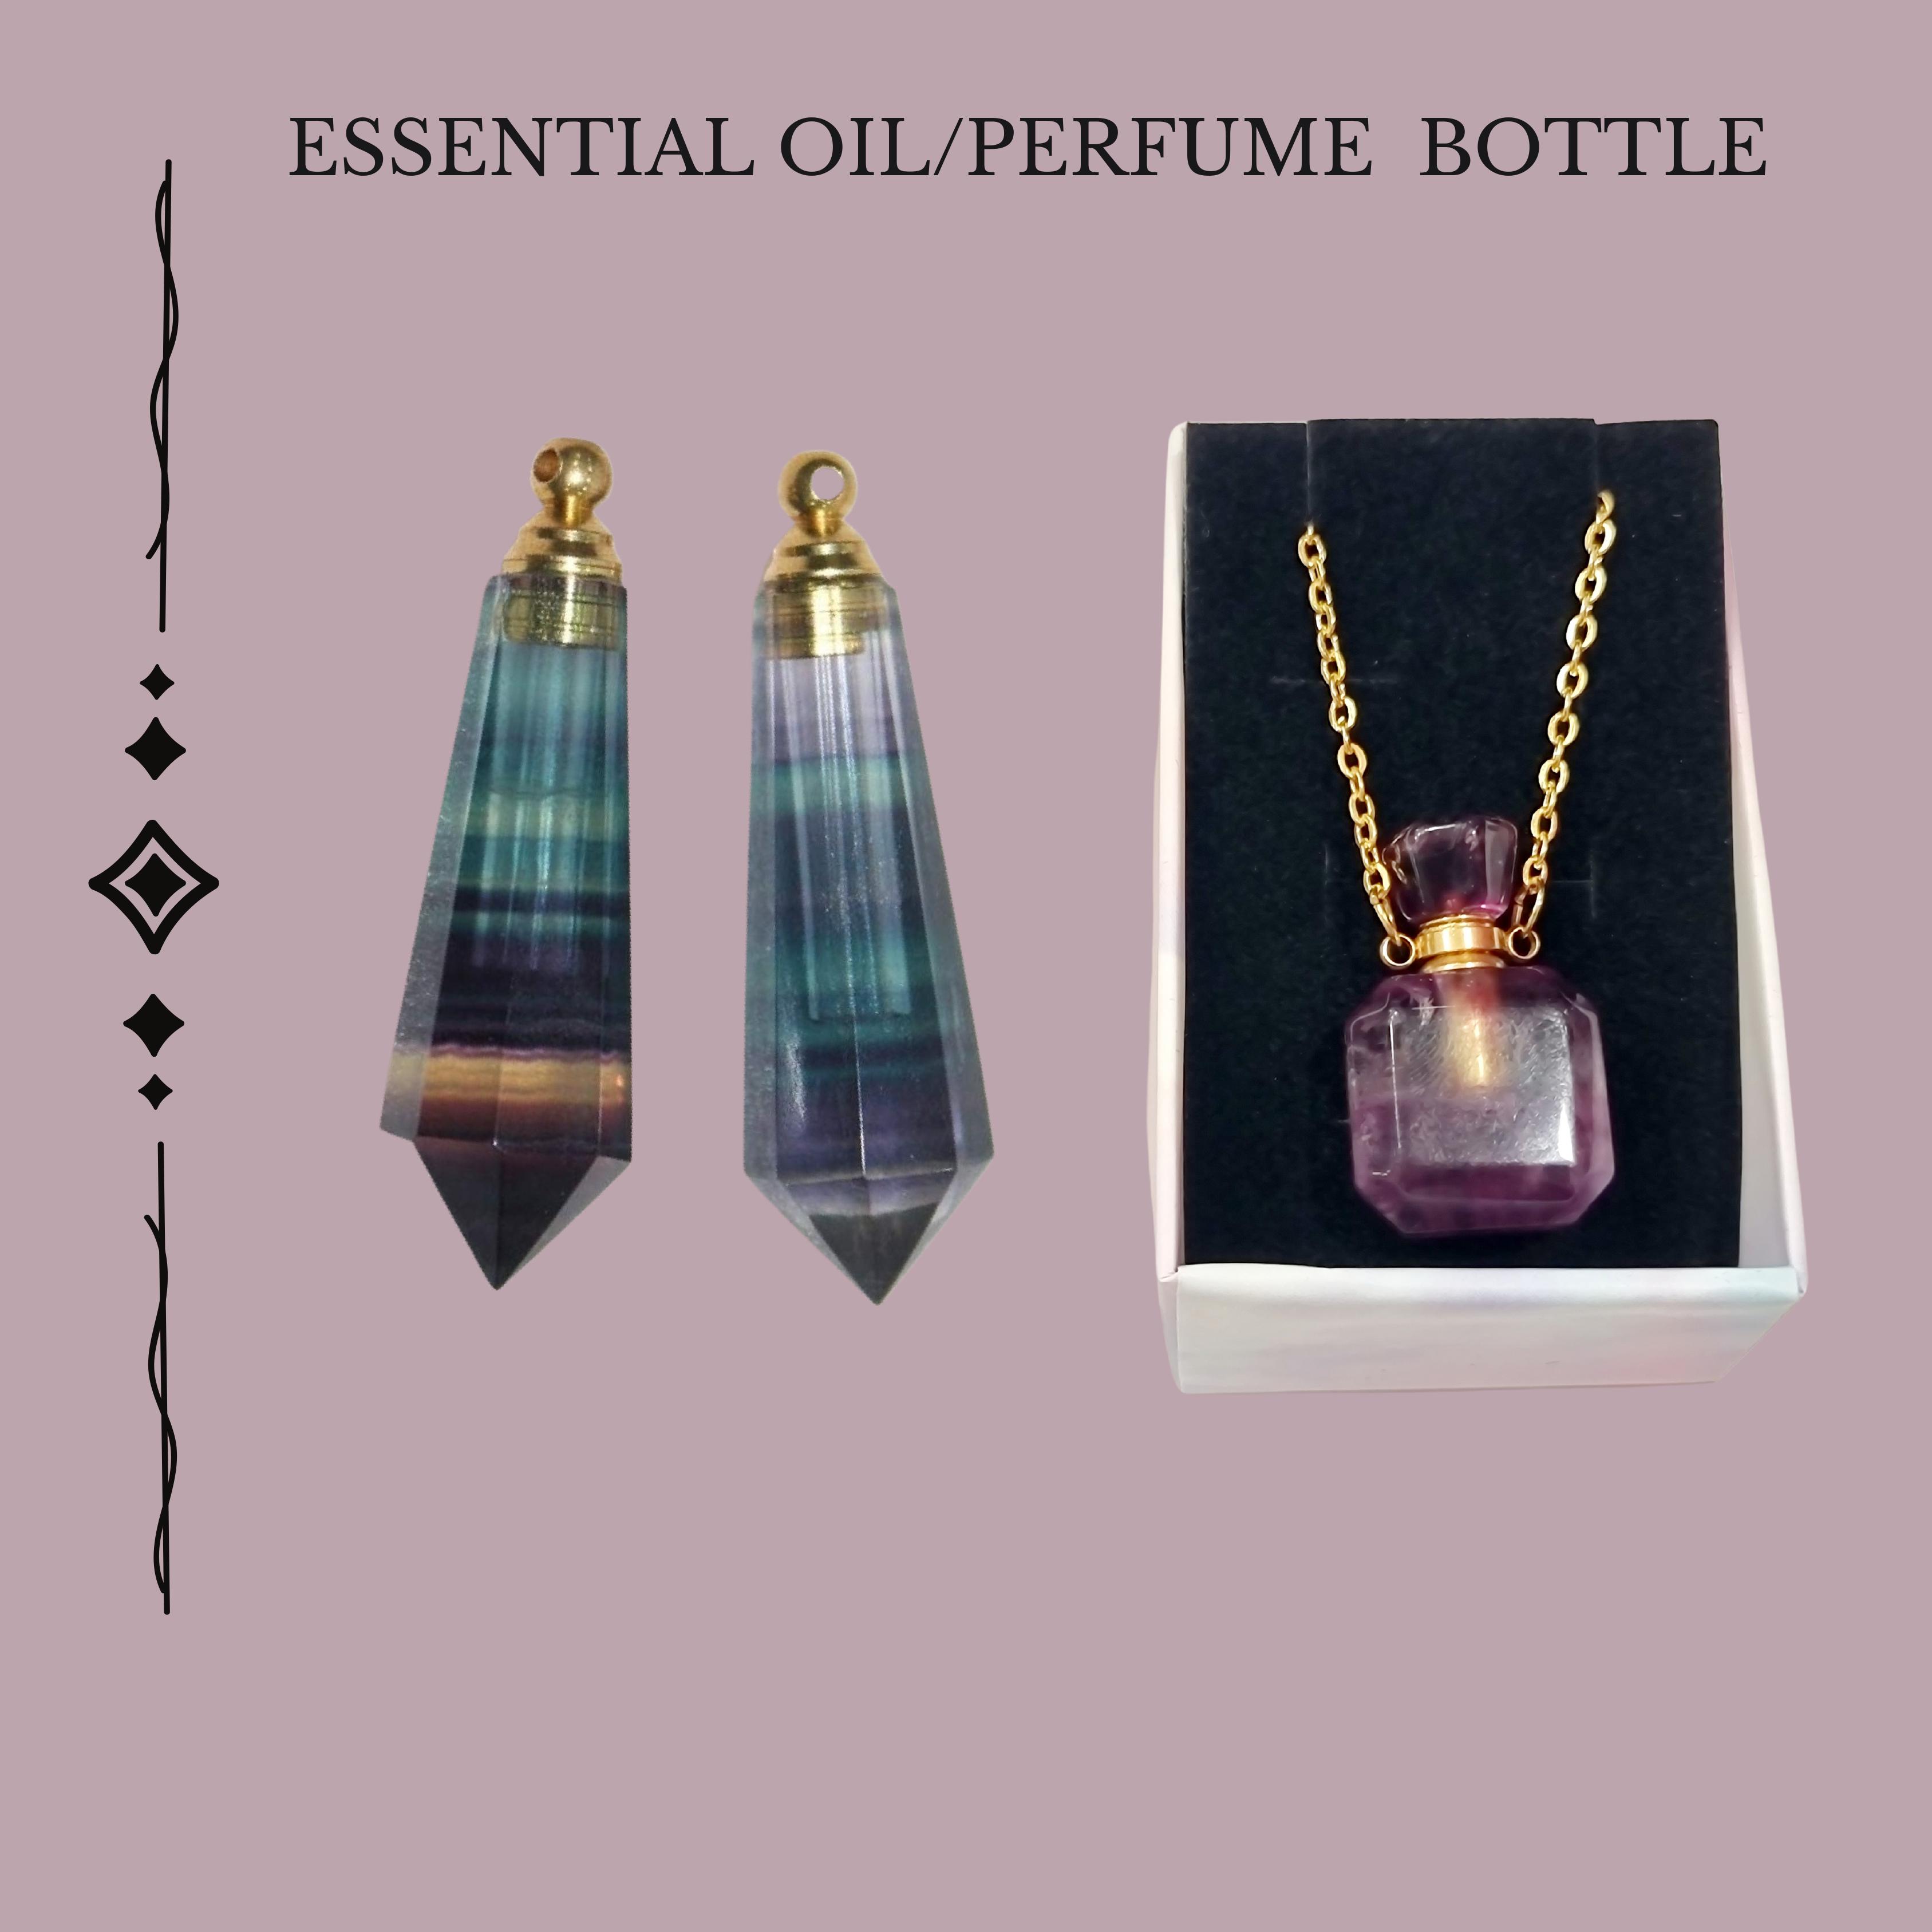 Essential Oil/Perfume Bottle